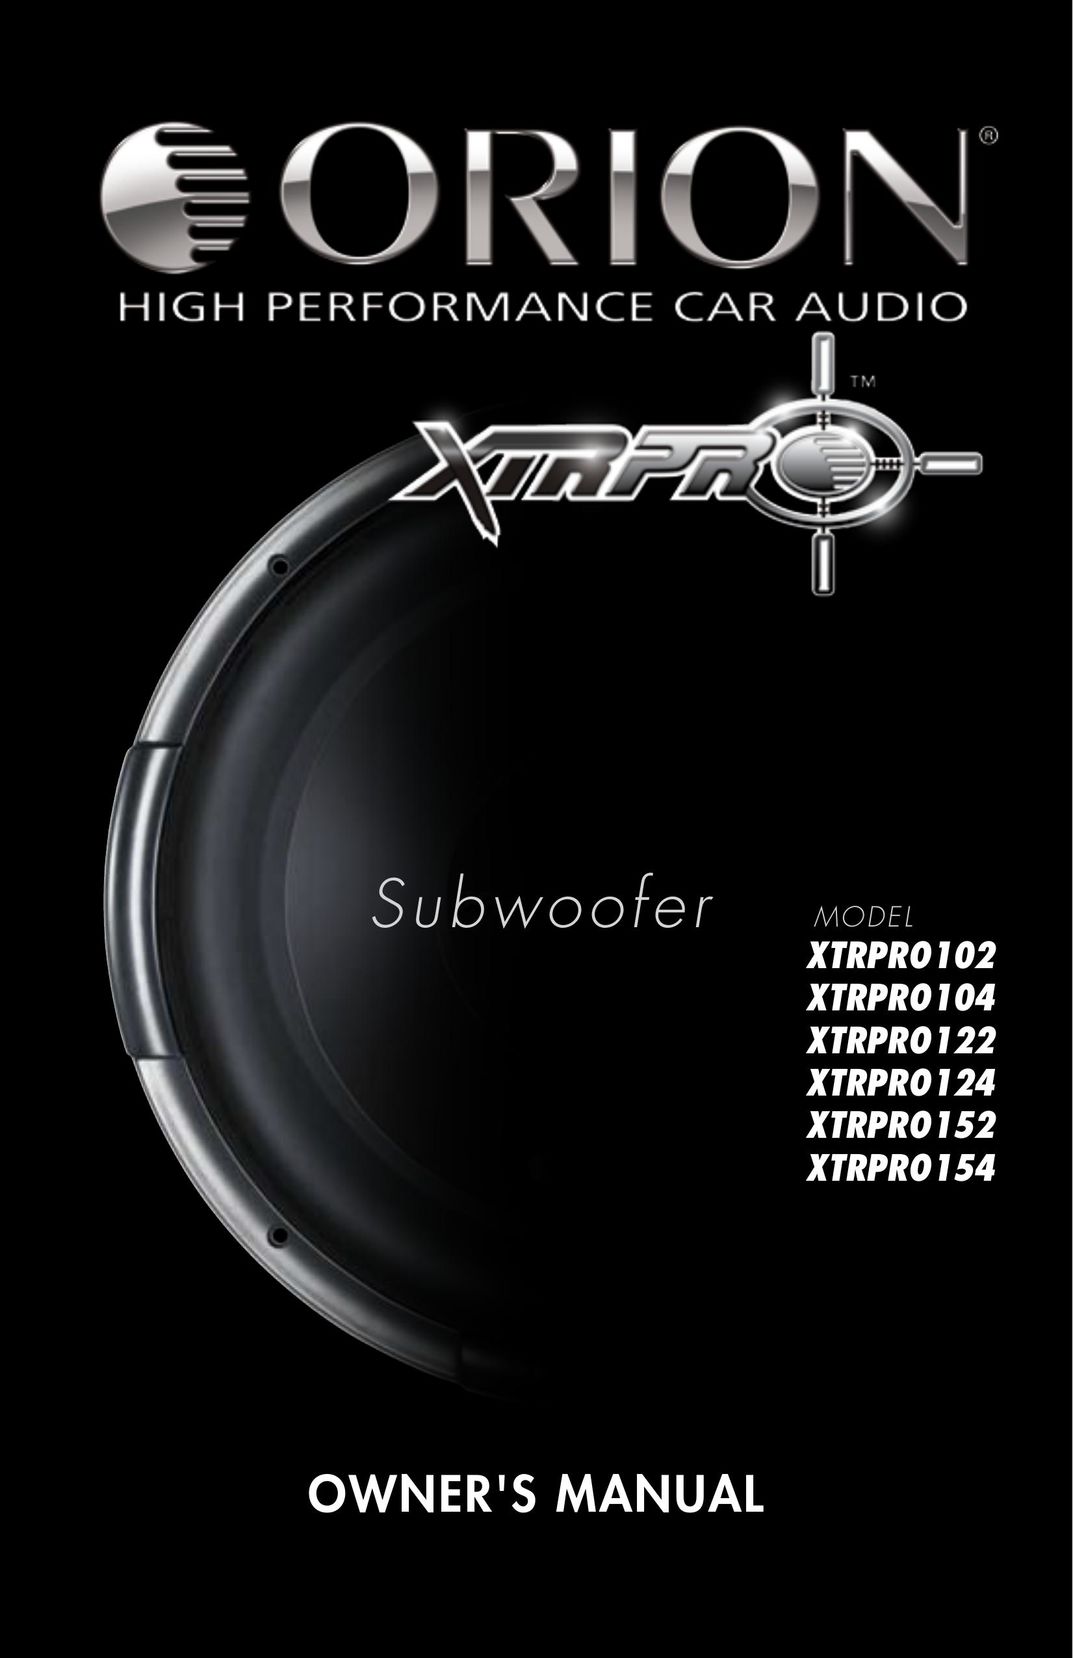 Orion Car Audio XTRPRO104 Speaker User Manual